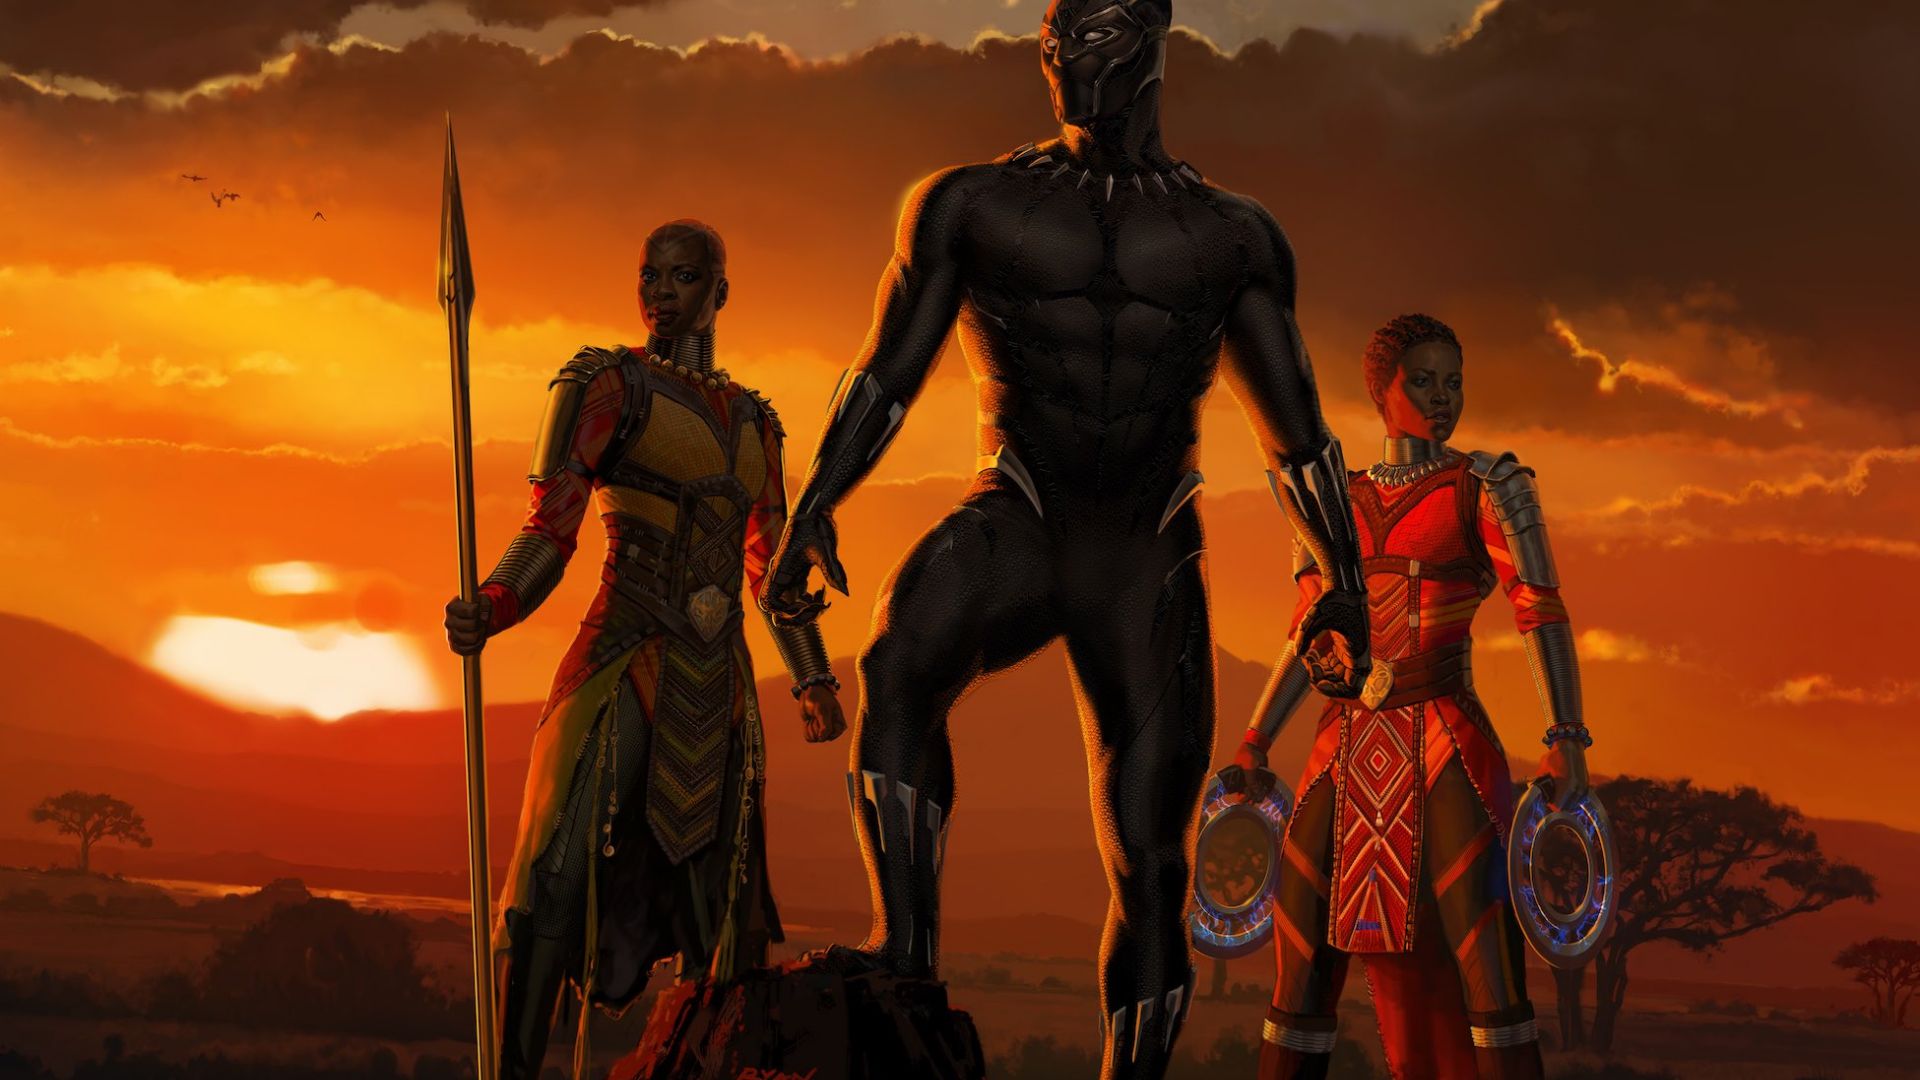 2018 Black Panther Art Wallpapers